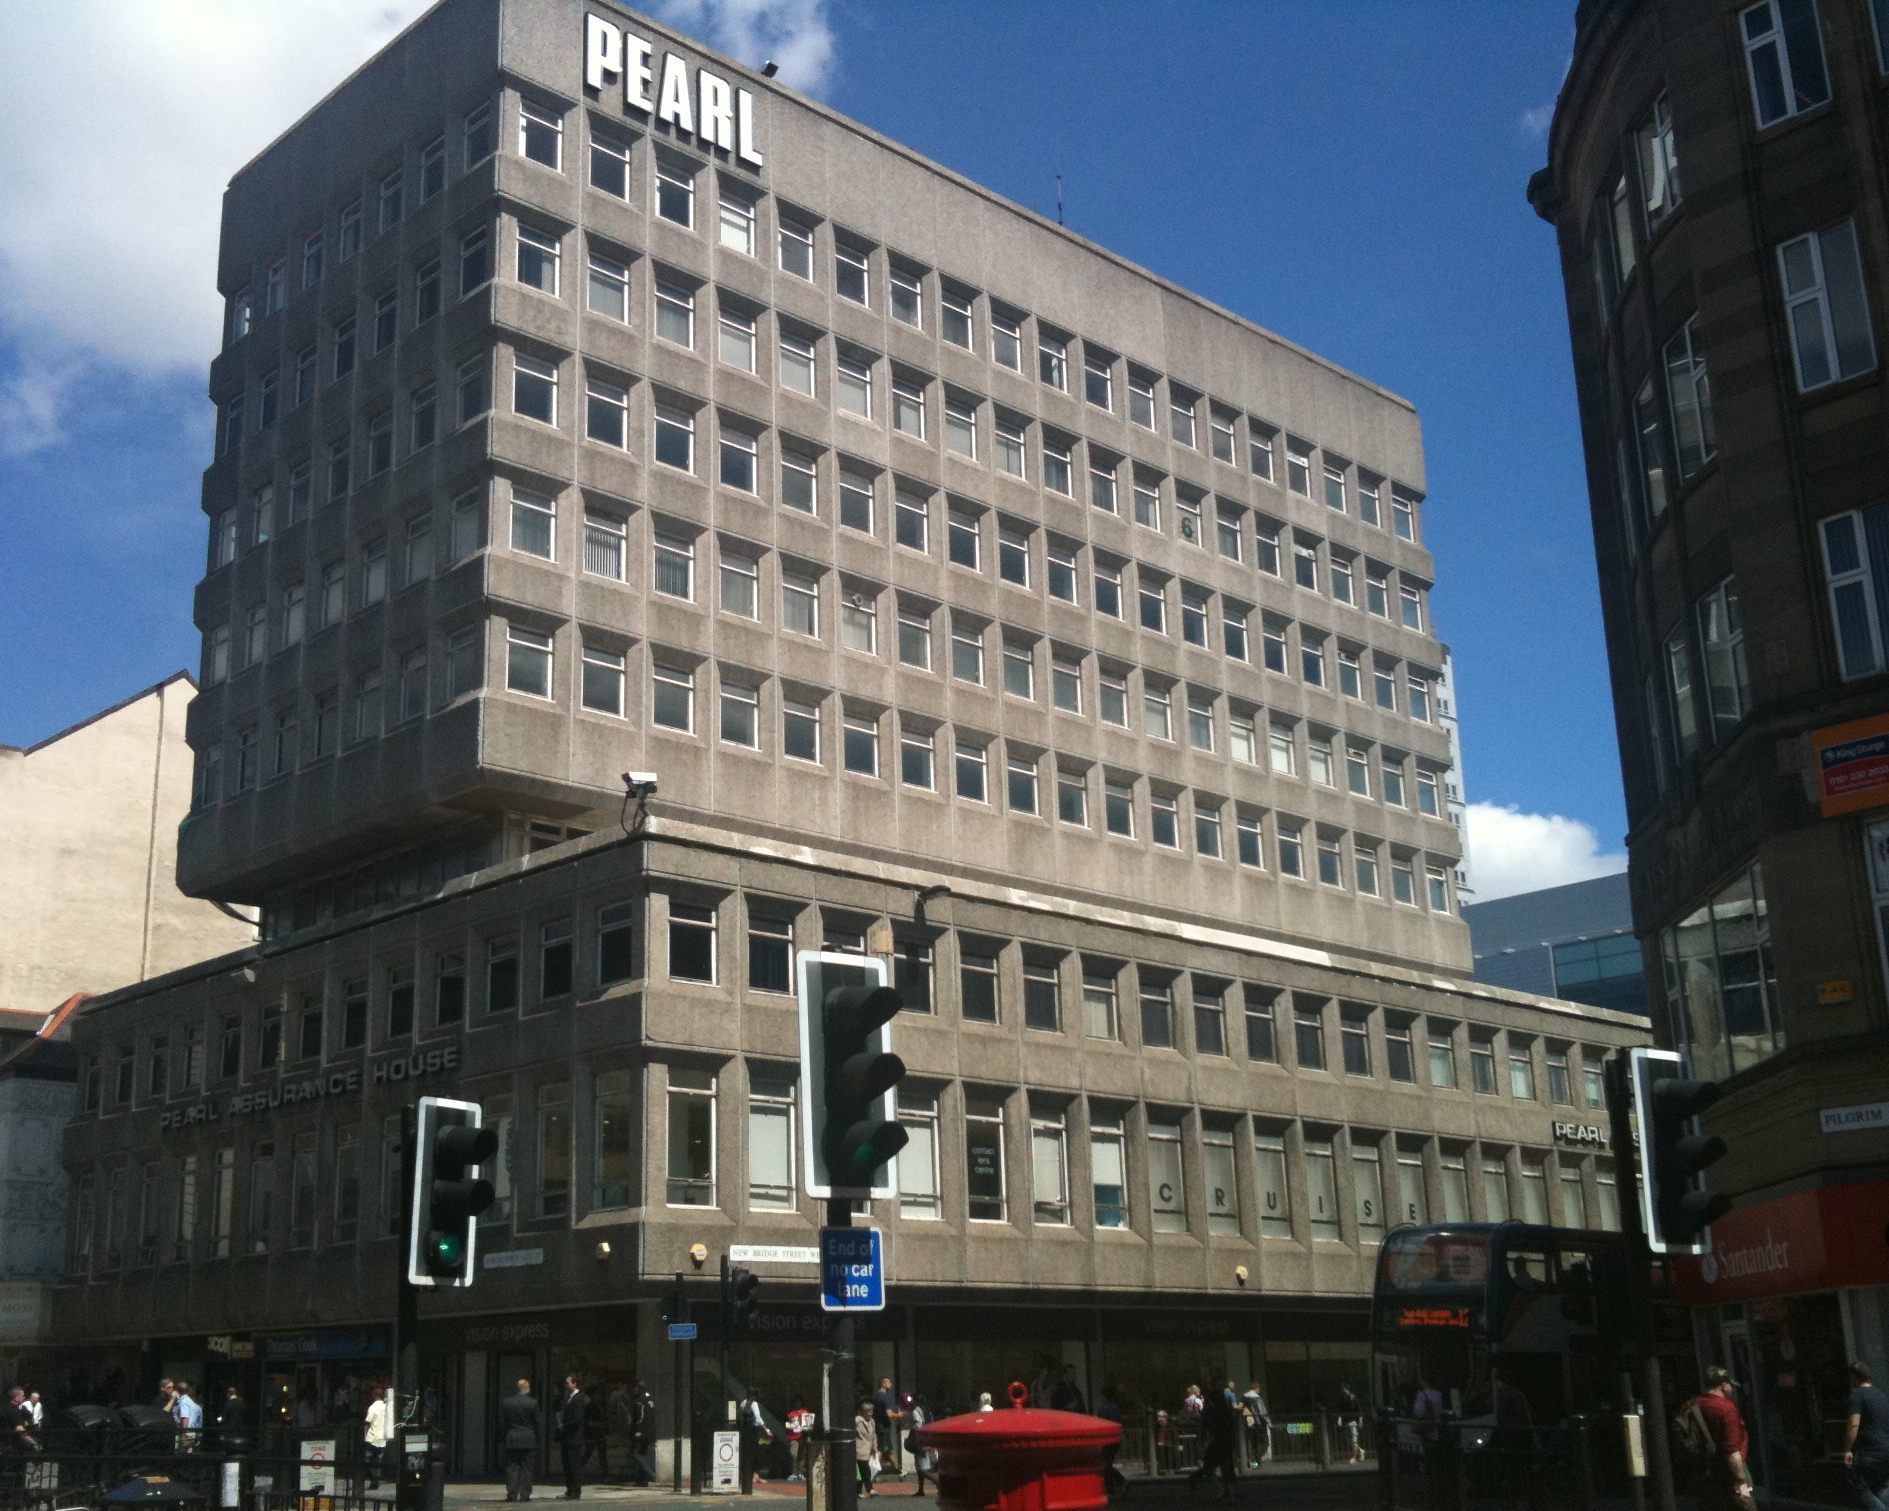 The Pearl (Pearl Assurance House) portfolio